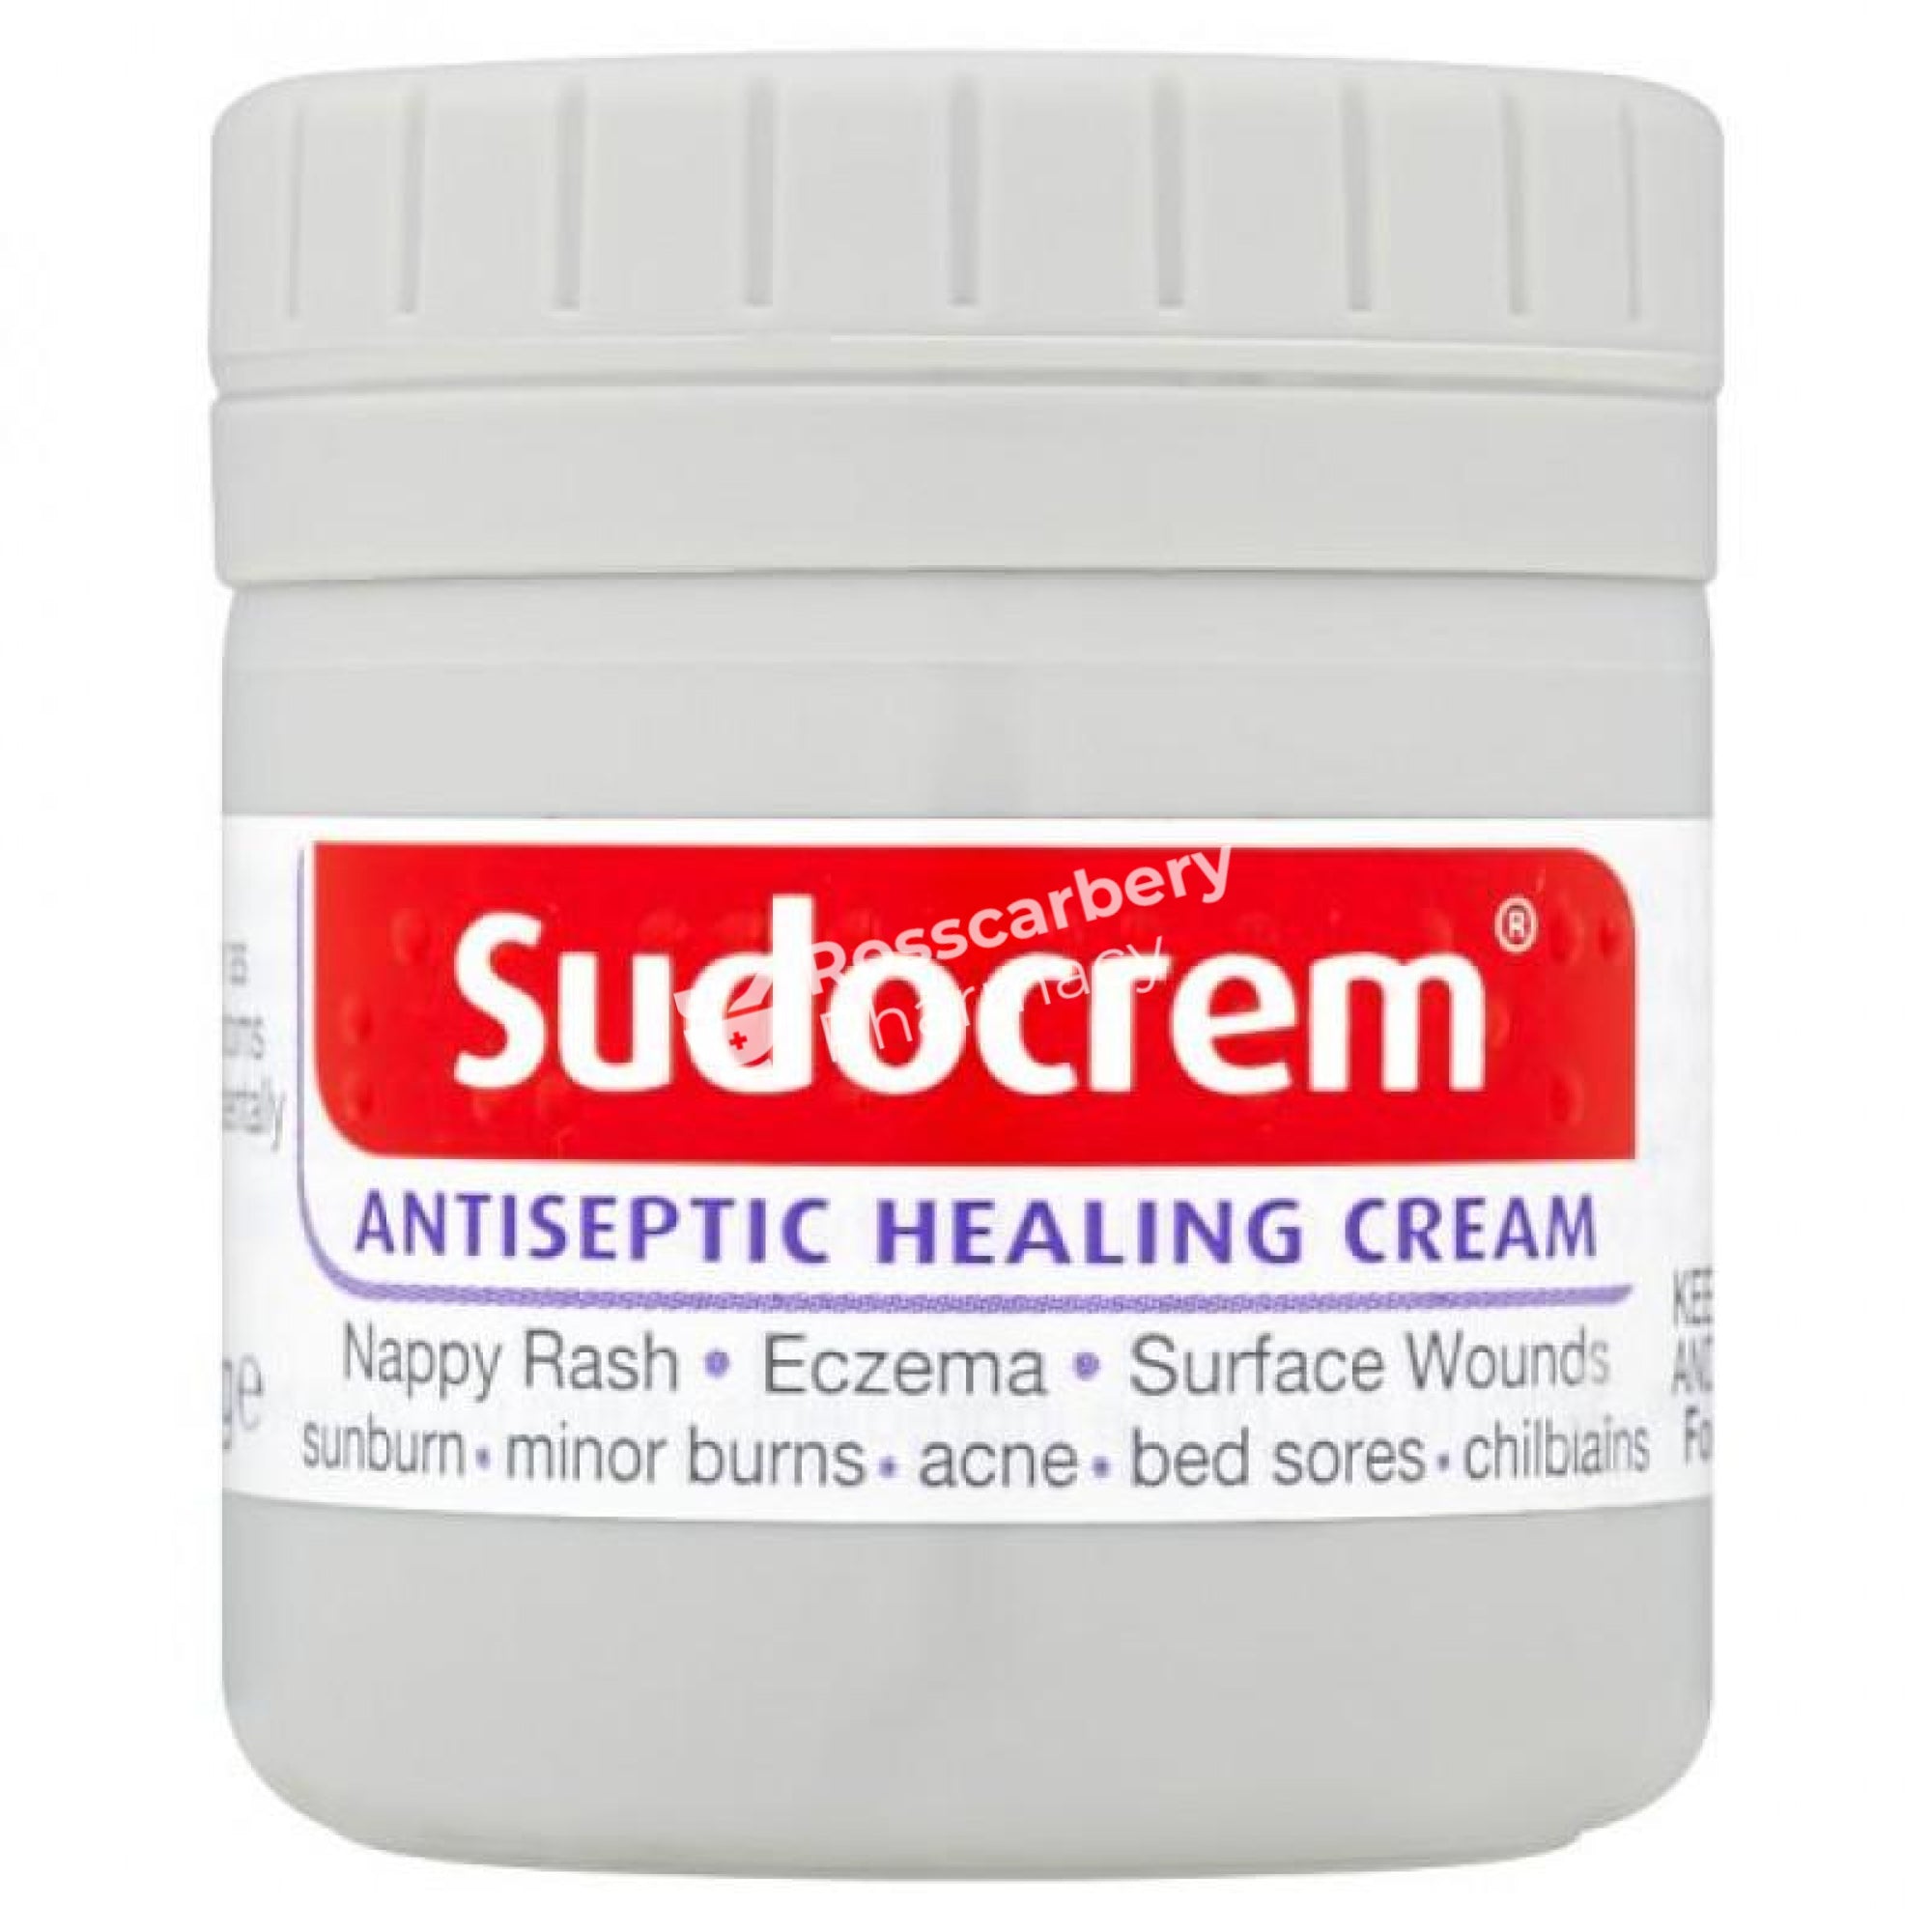 Sudocrem Antiseptic Healing Cream & Wound